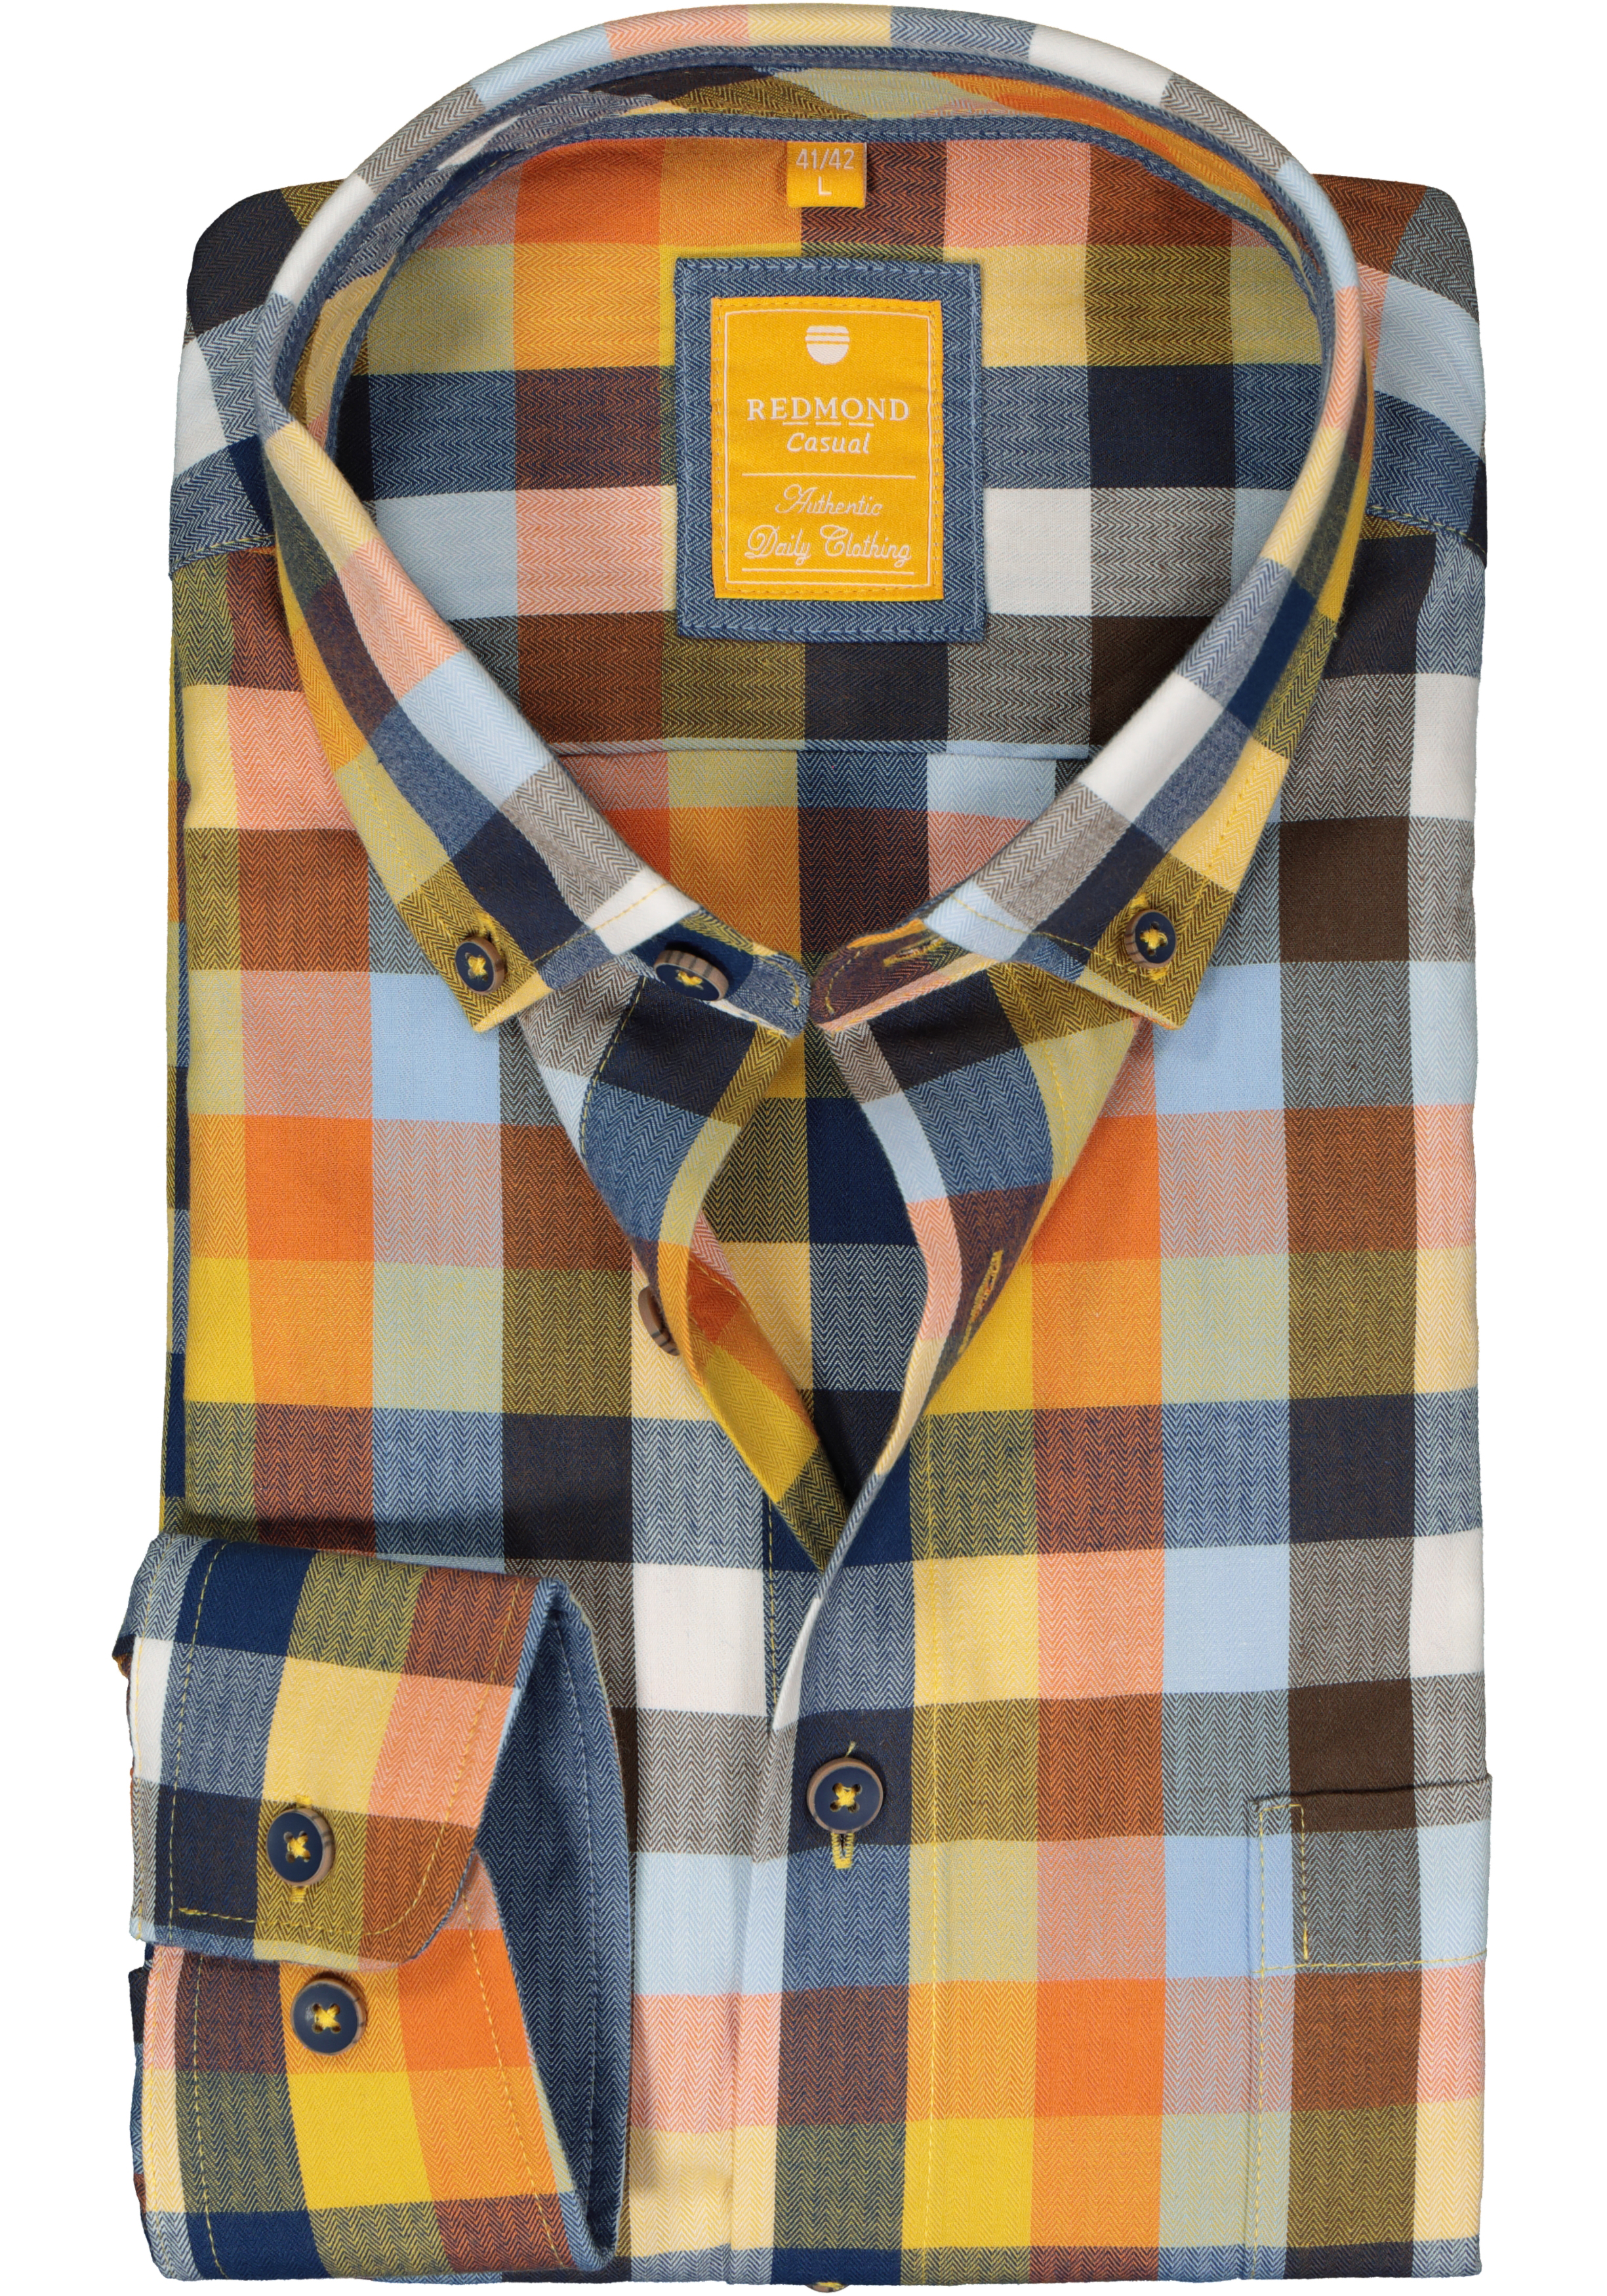 Redmond modern fit overhemd, herringbone, blauw, oranje en geel geruit